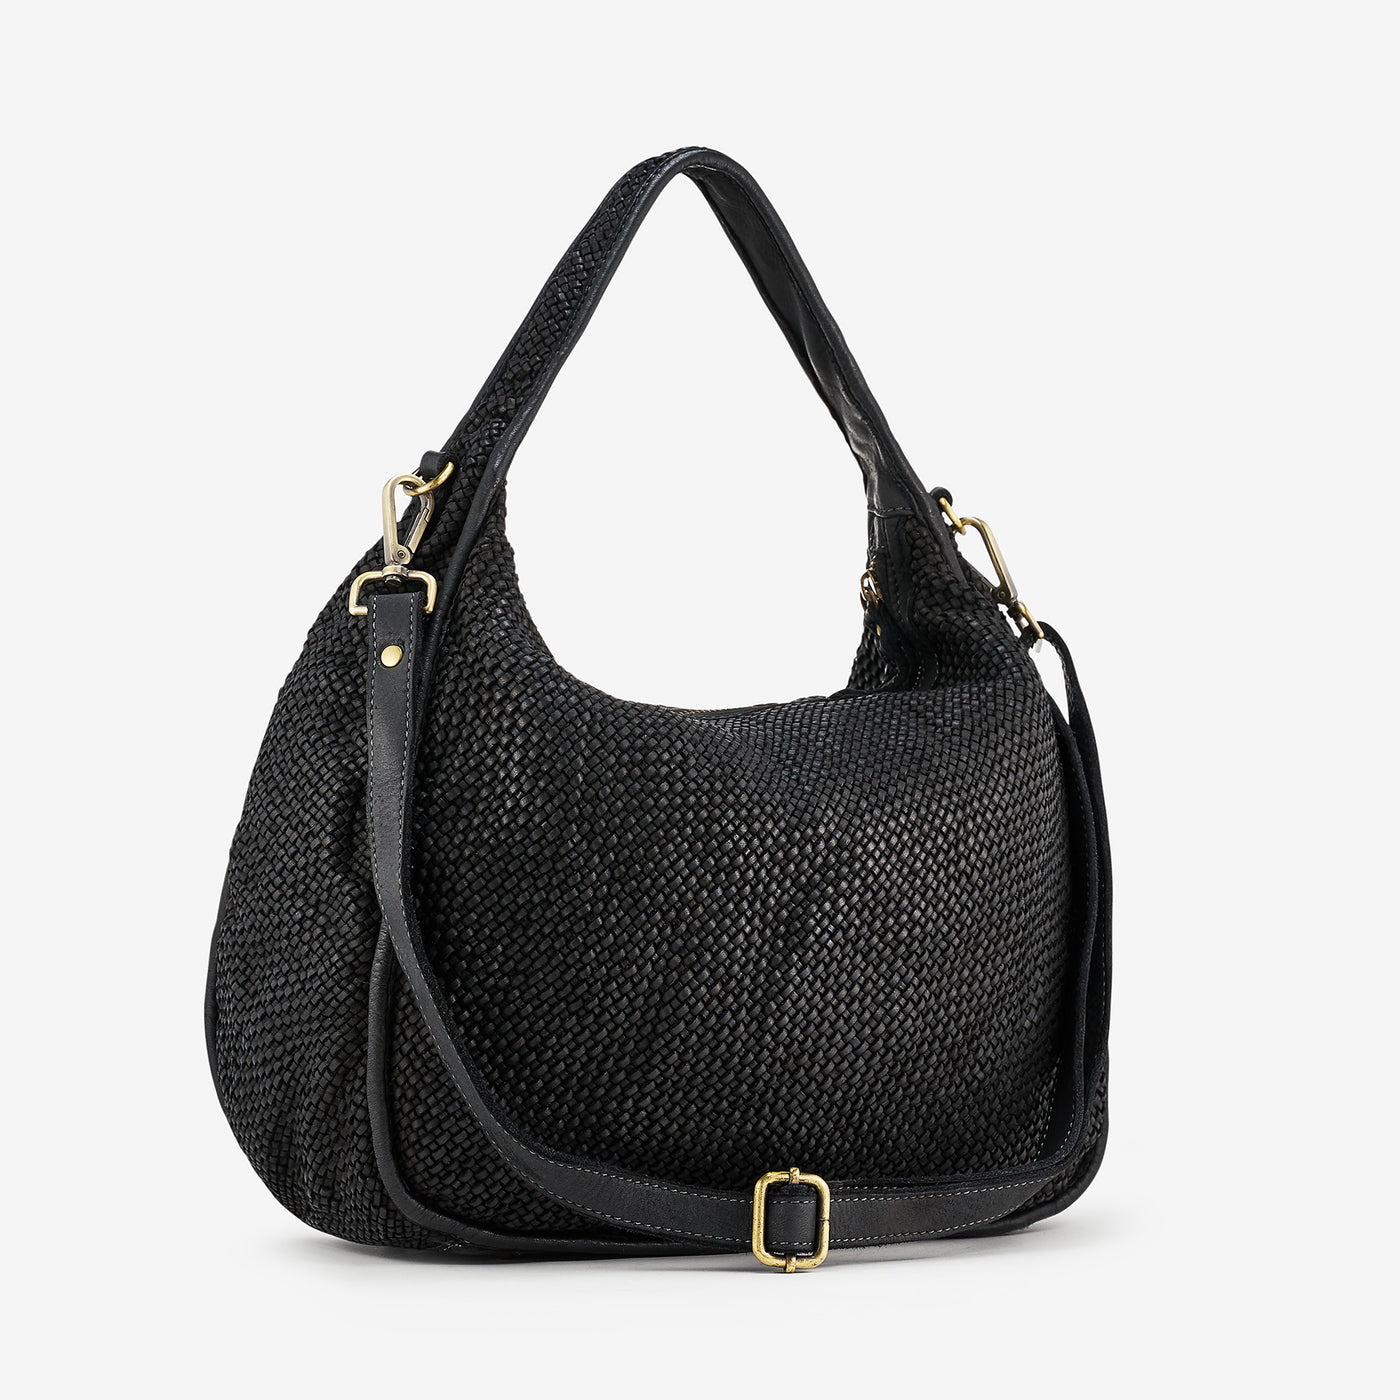 VIAVERDI Black Intrecciato Leather Shoulder Bag Made in Italy 